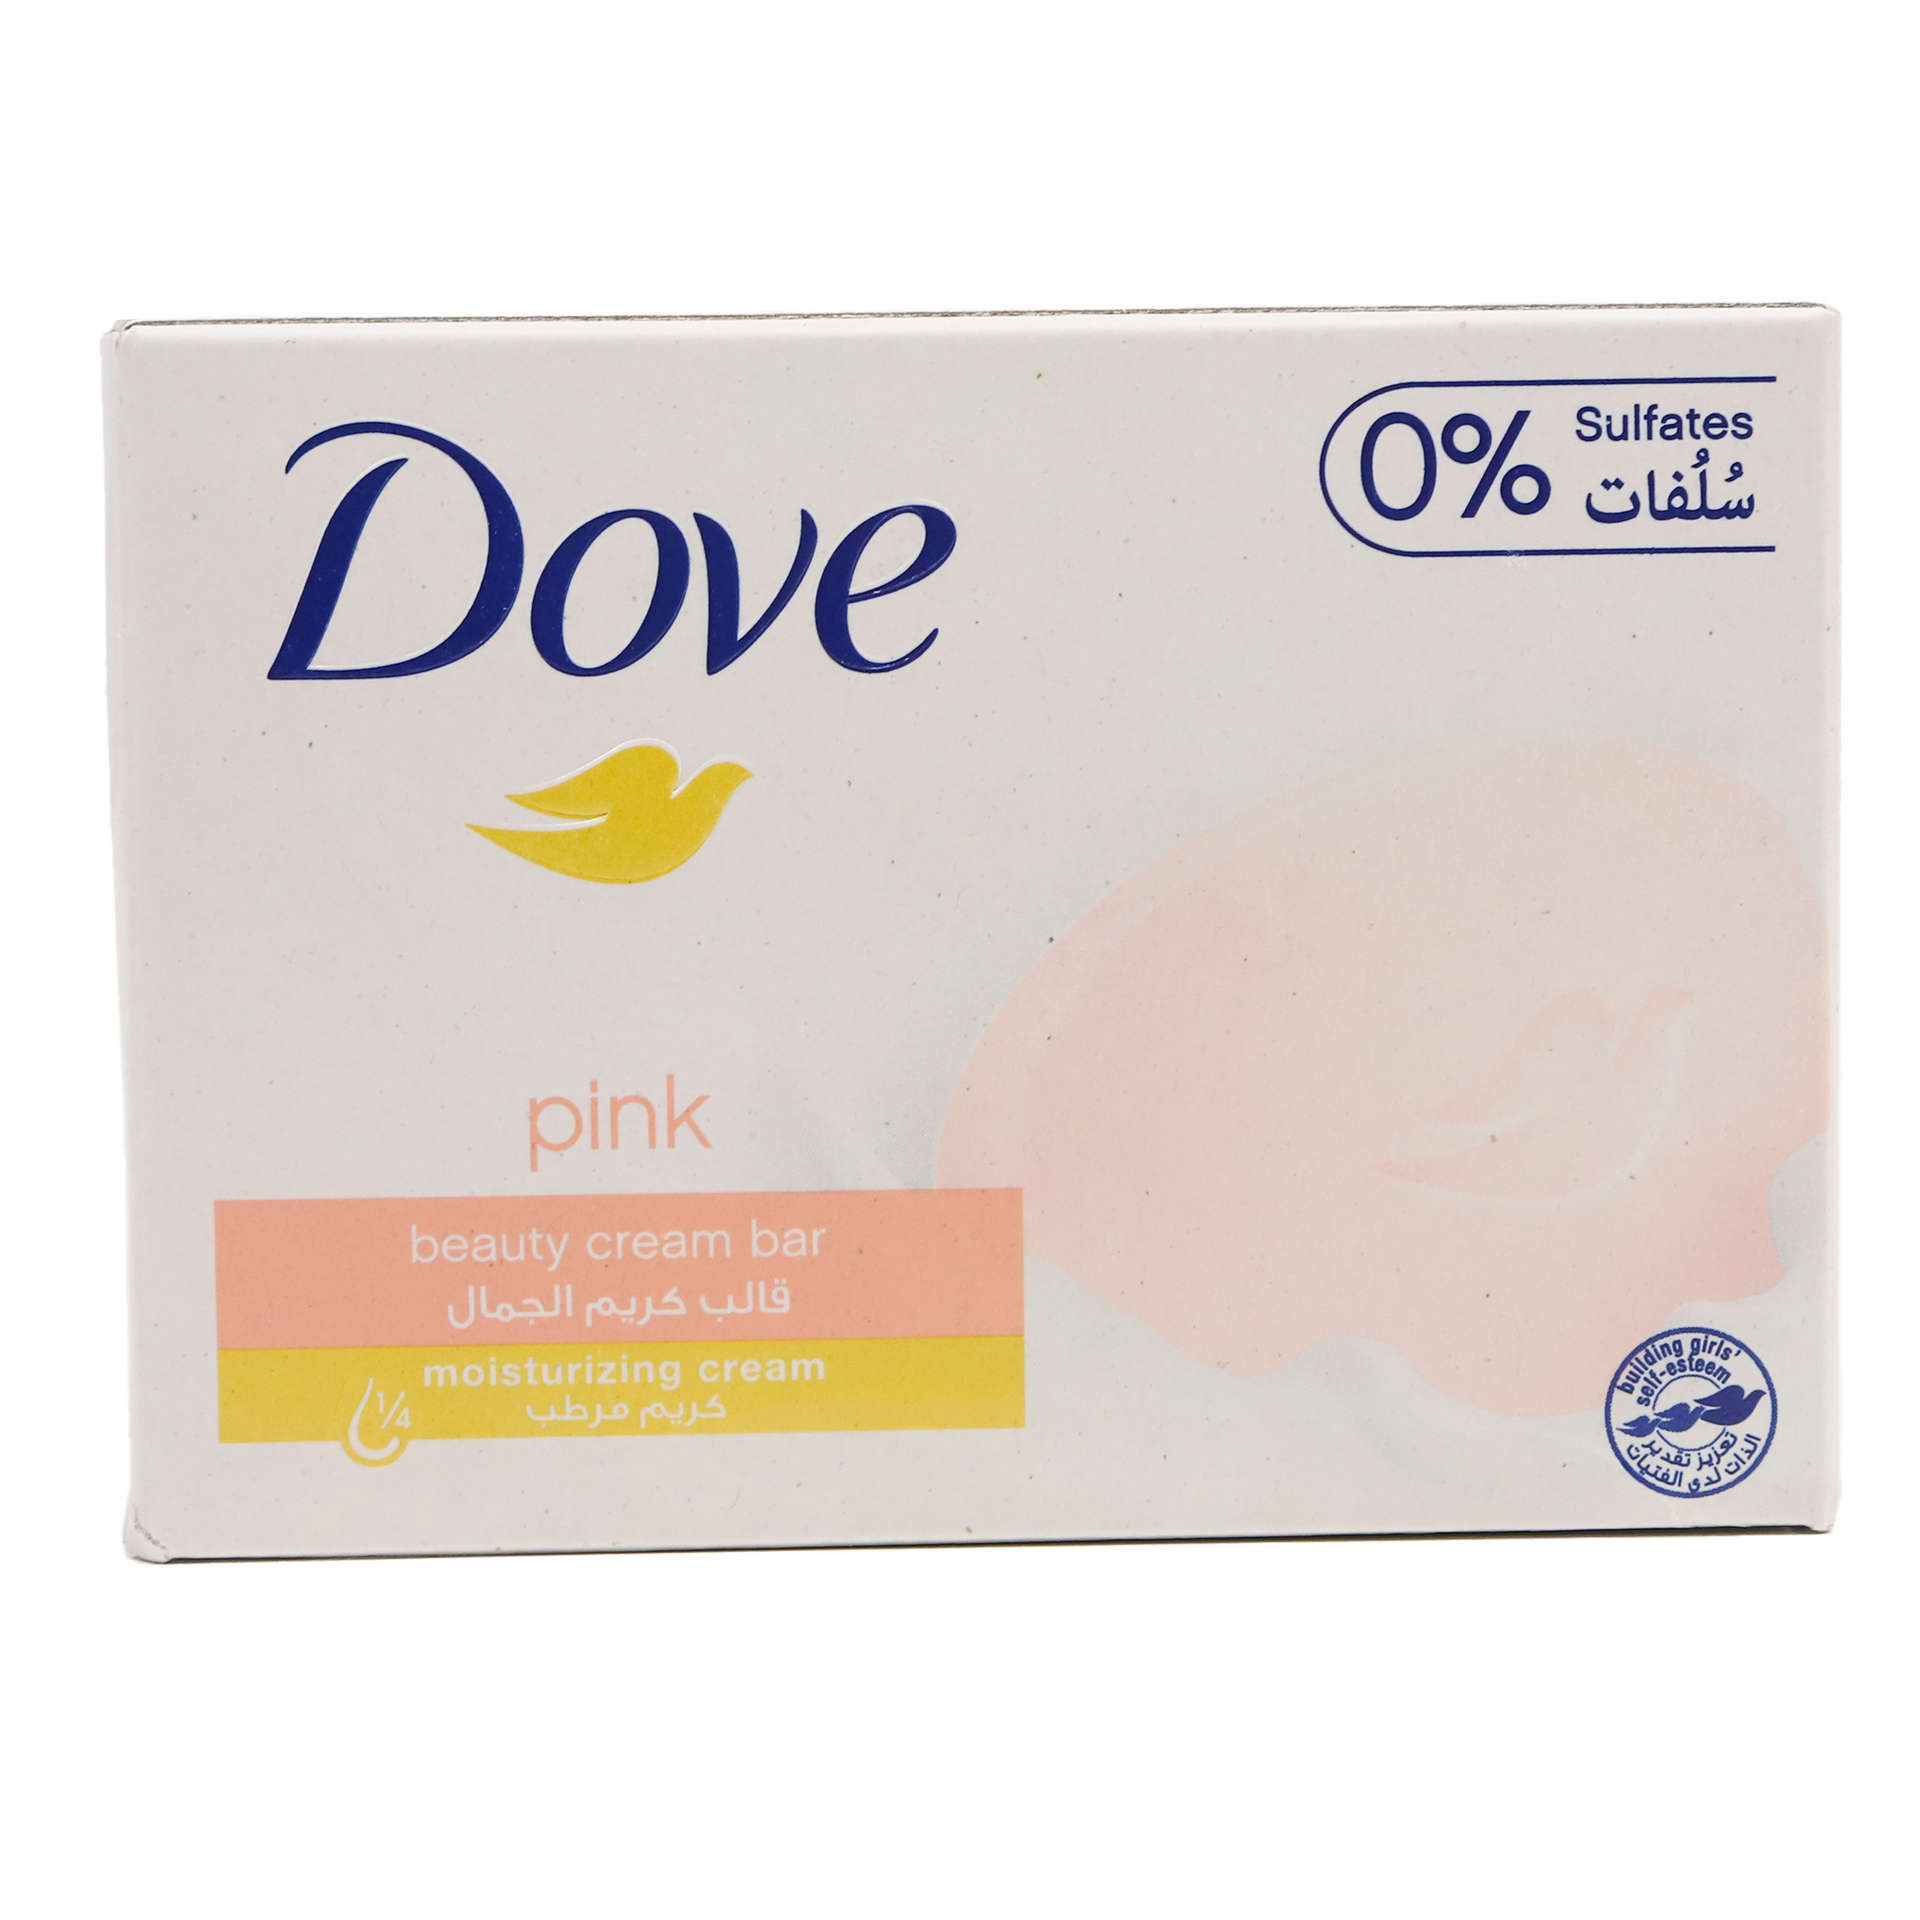 Dove Moisturizing Beauty Cream Bar Soap Pink 160gms- Pack of